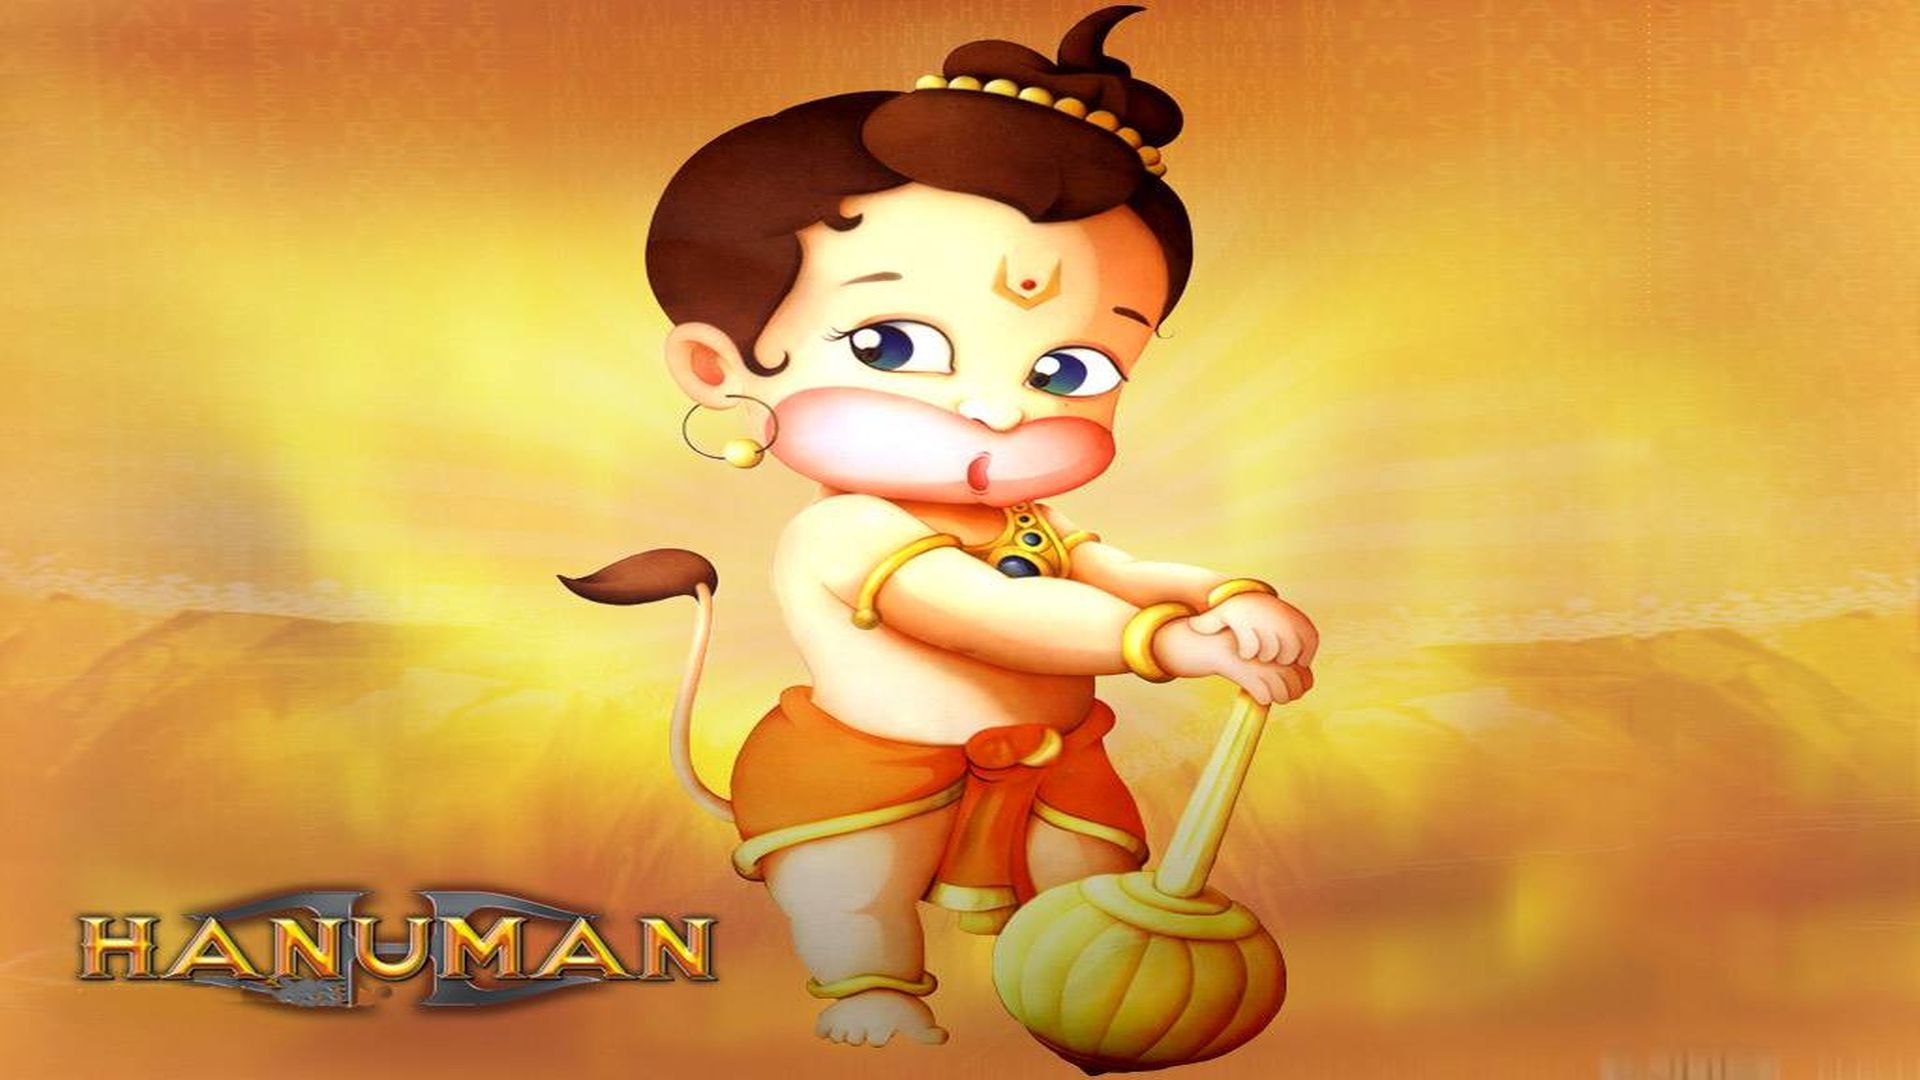 Hanuman Cartoon. Hindu Gods and Goddesses